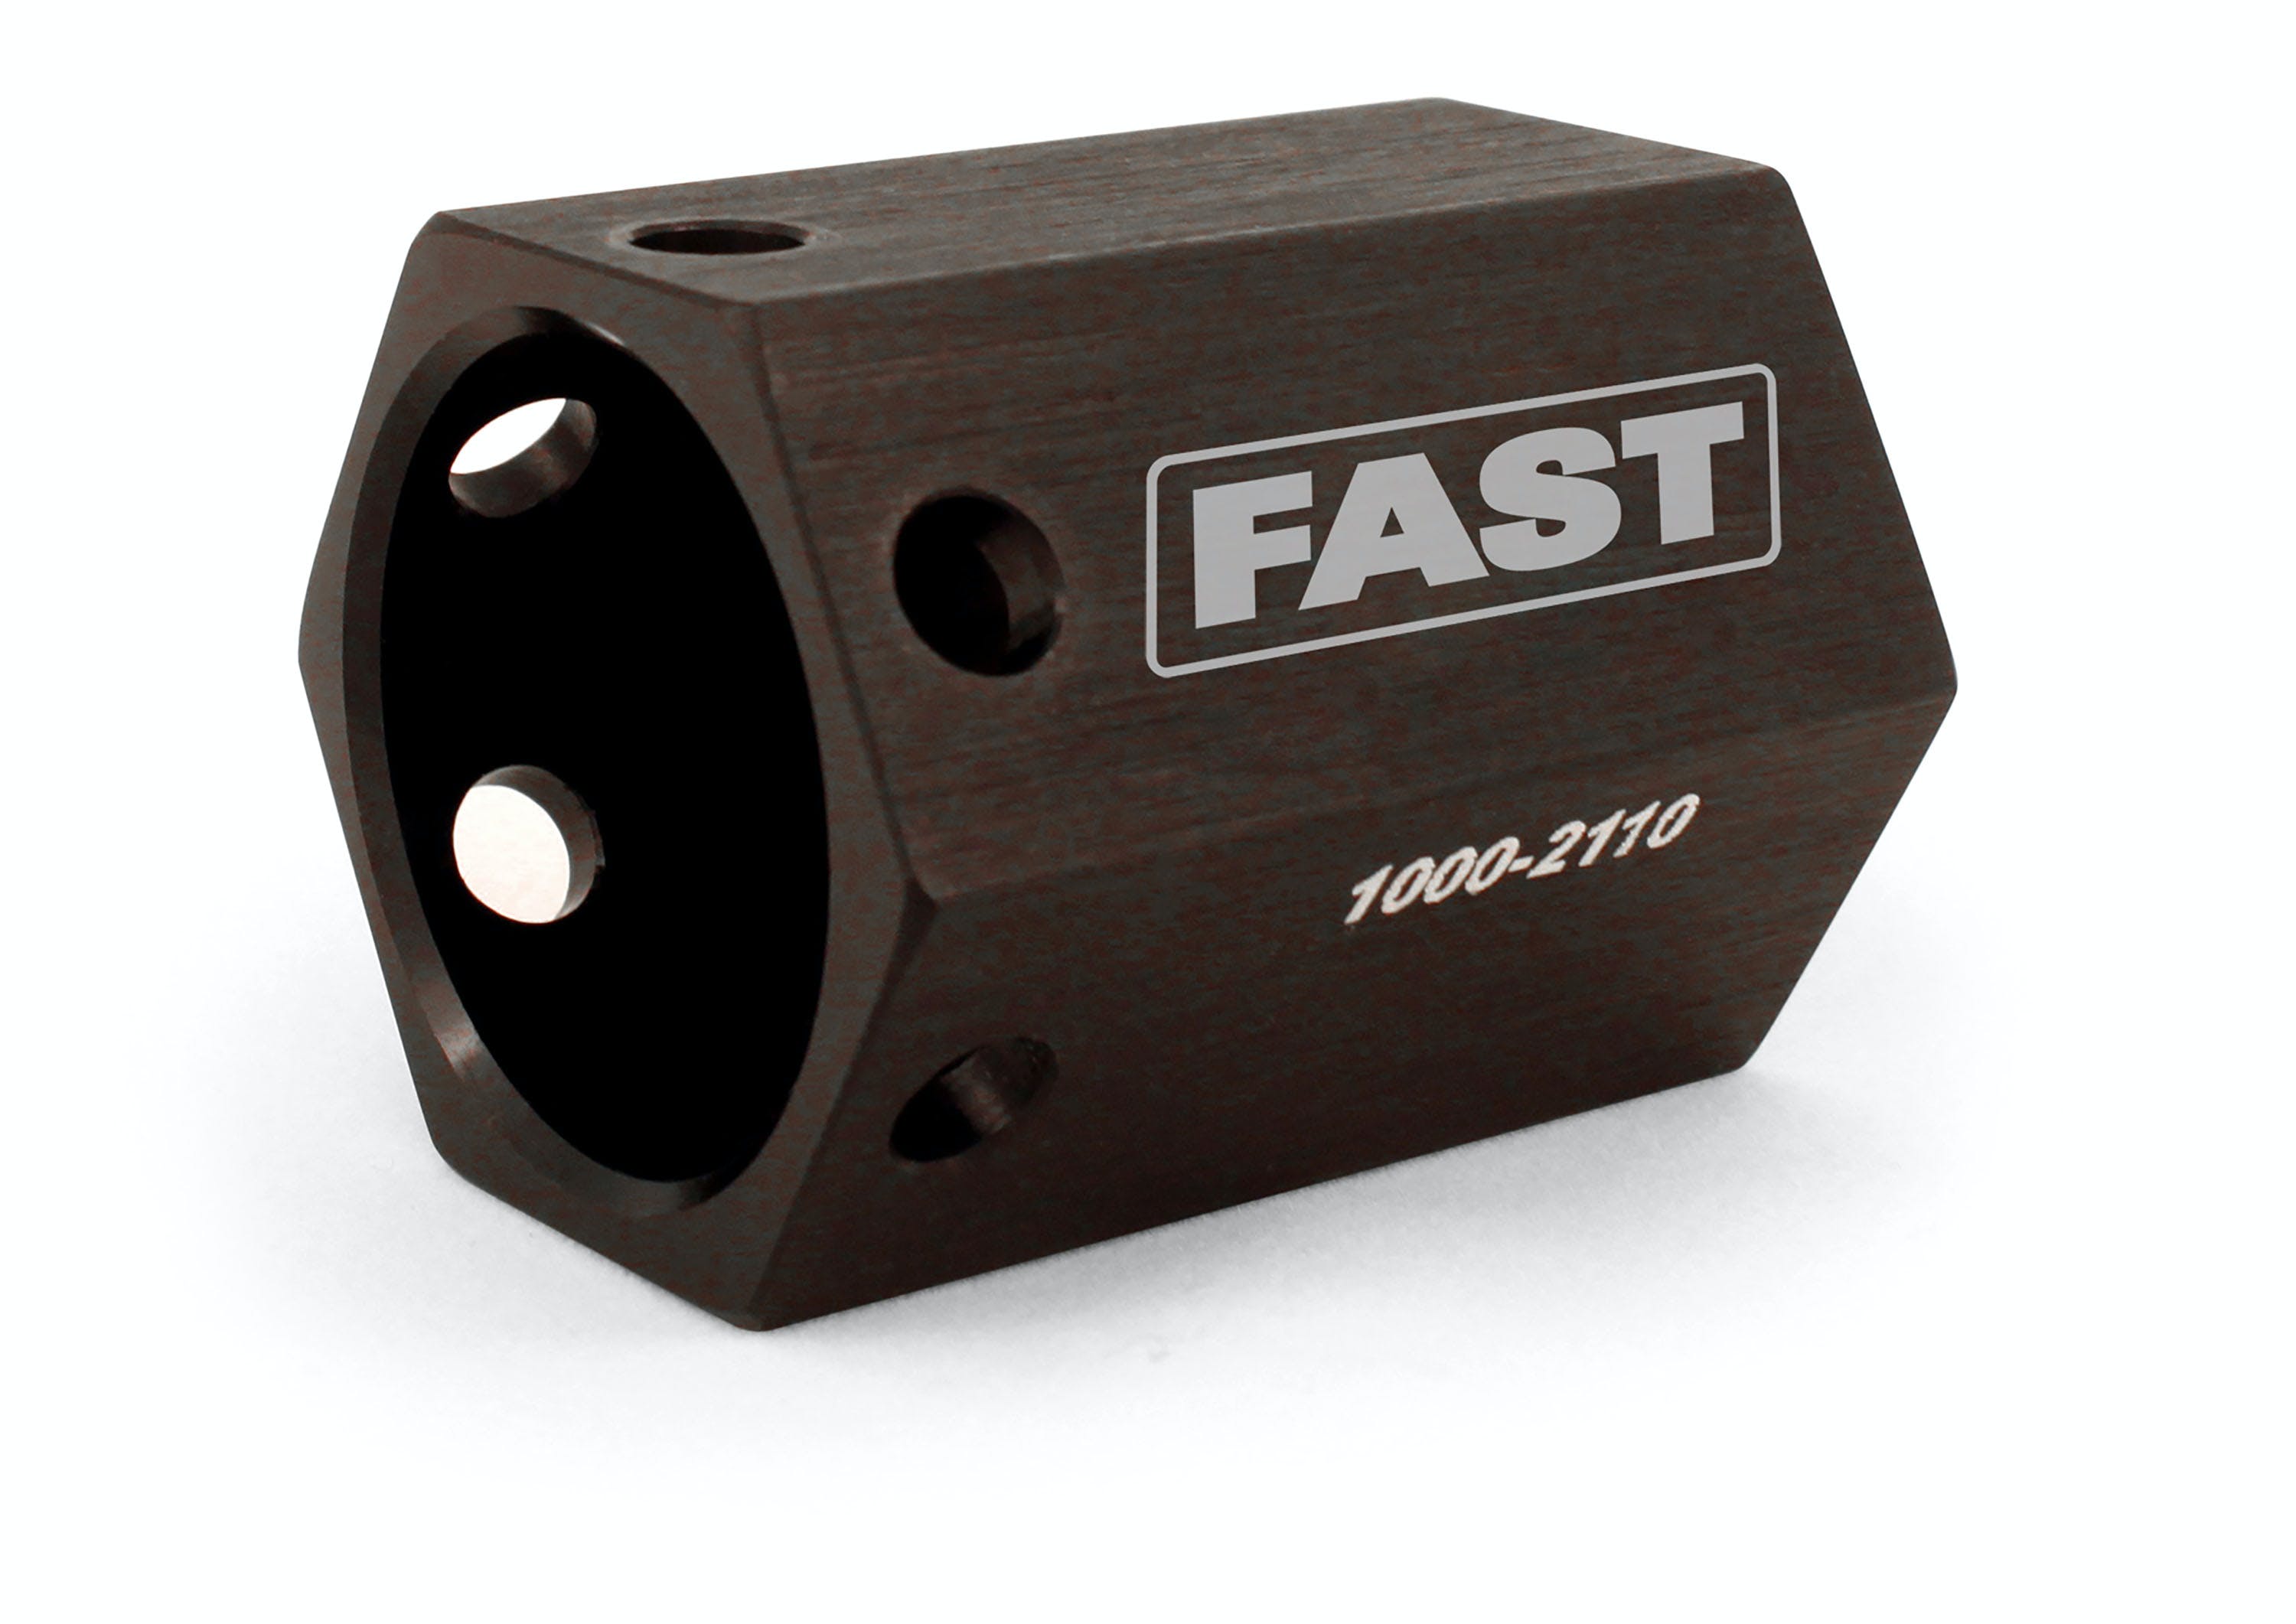 FAST - Fuel Air Spark Technology 1000-2110 Crank Trigger Sensor Guard